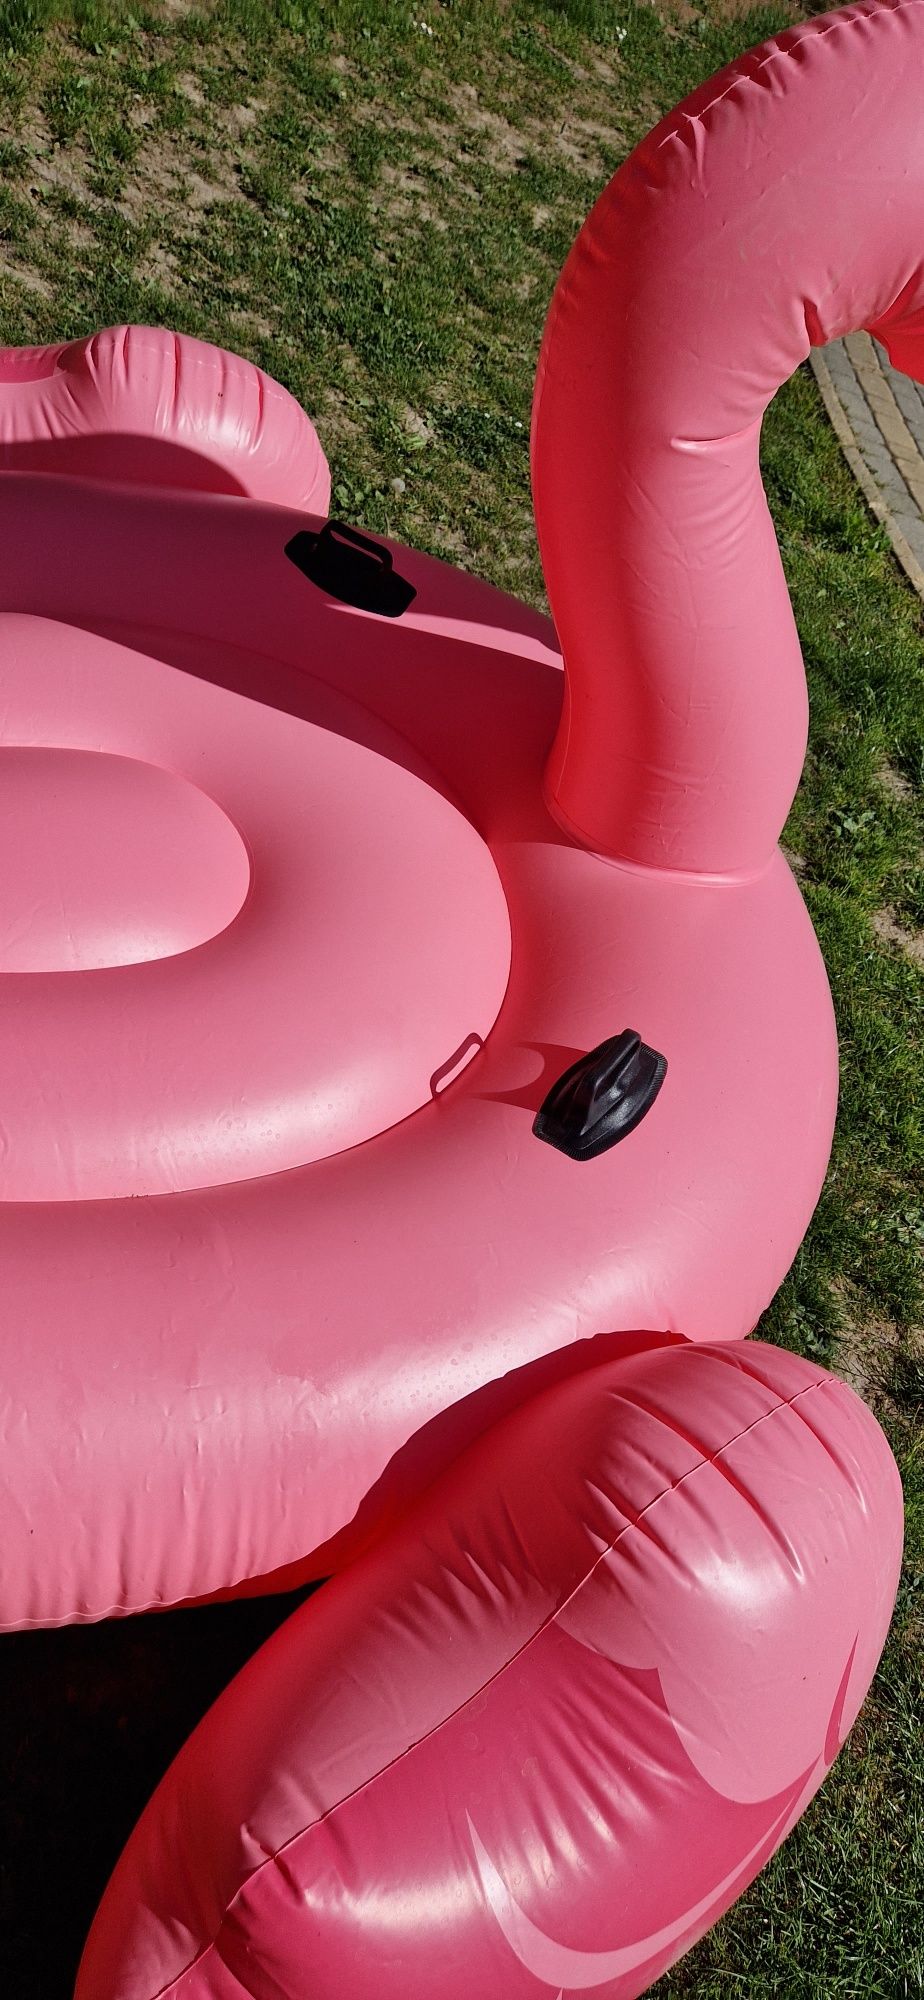 Flaming duży materac różowy dmuchany na plaze do basenu